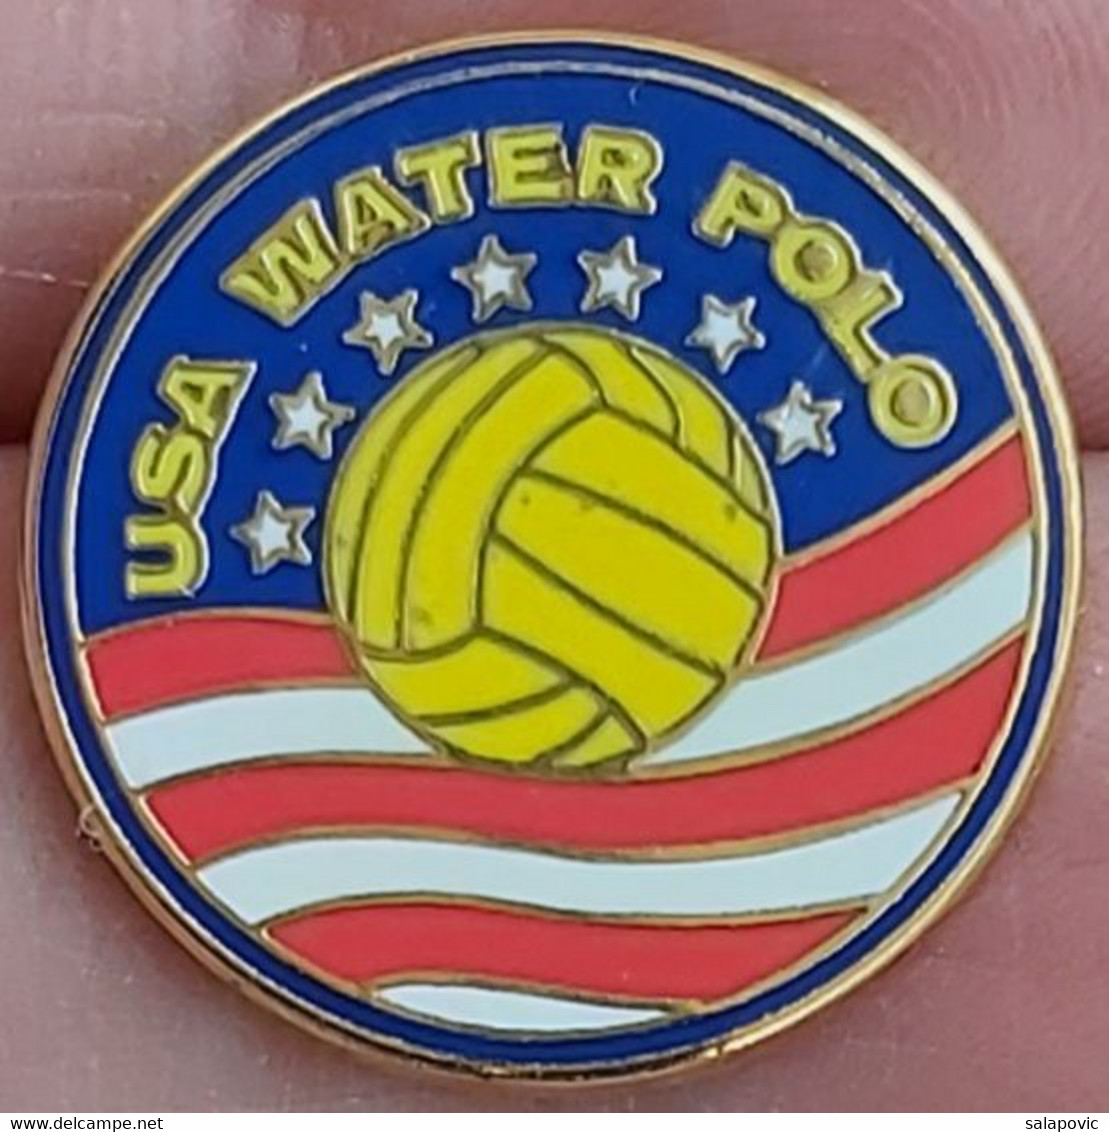 USA WATER POLO Federation Union Association PIN A7/7 - Waterpolo